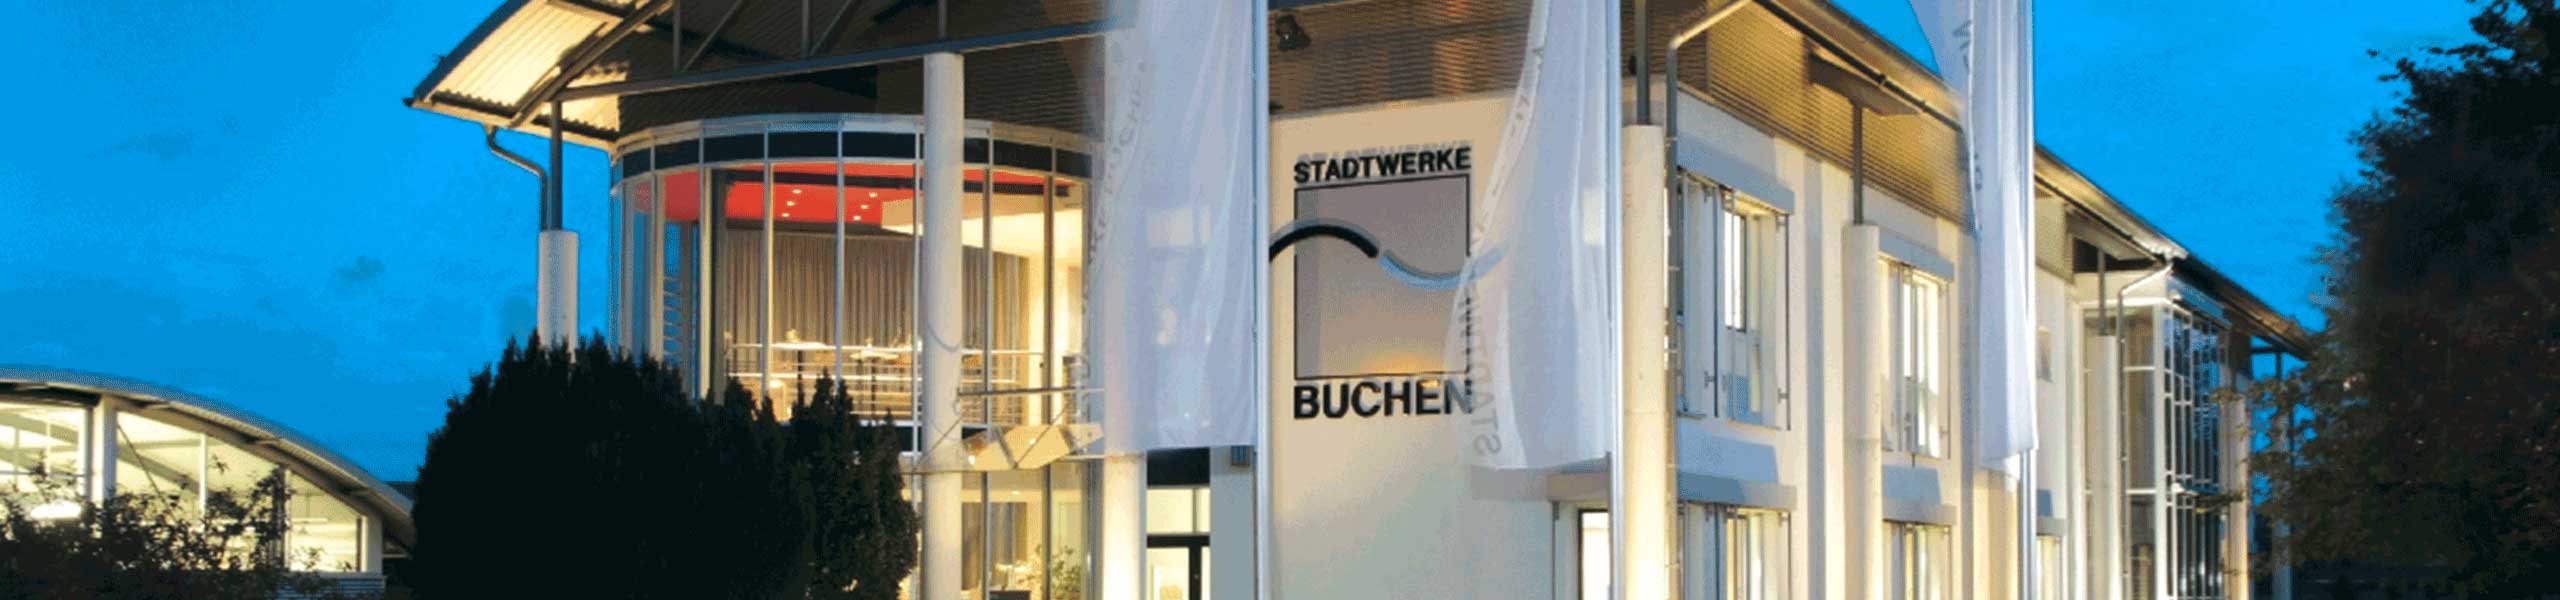 Stadtwerke Buchen GmbH & Co KG - Kontakt